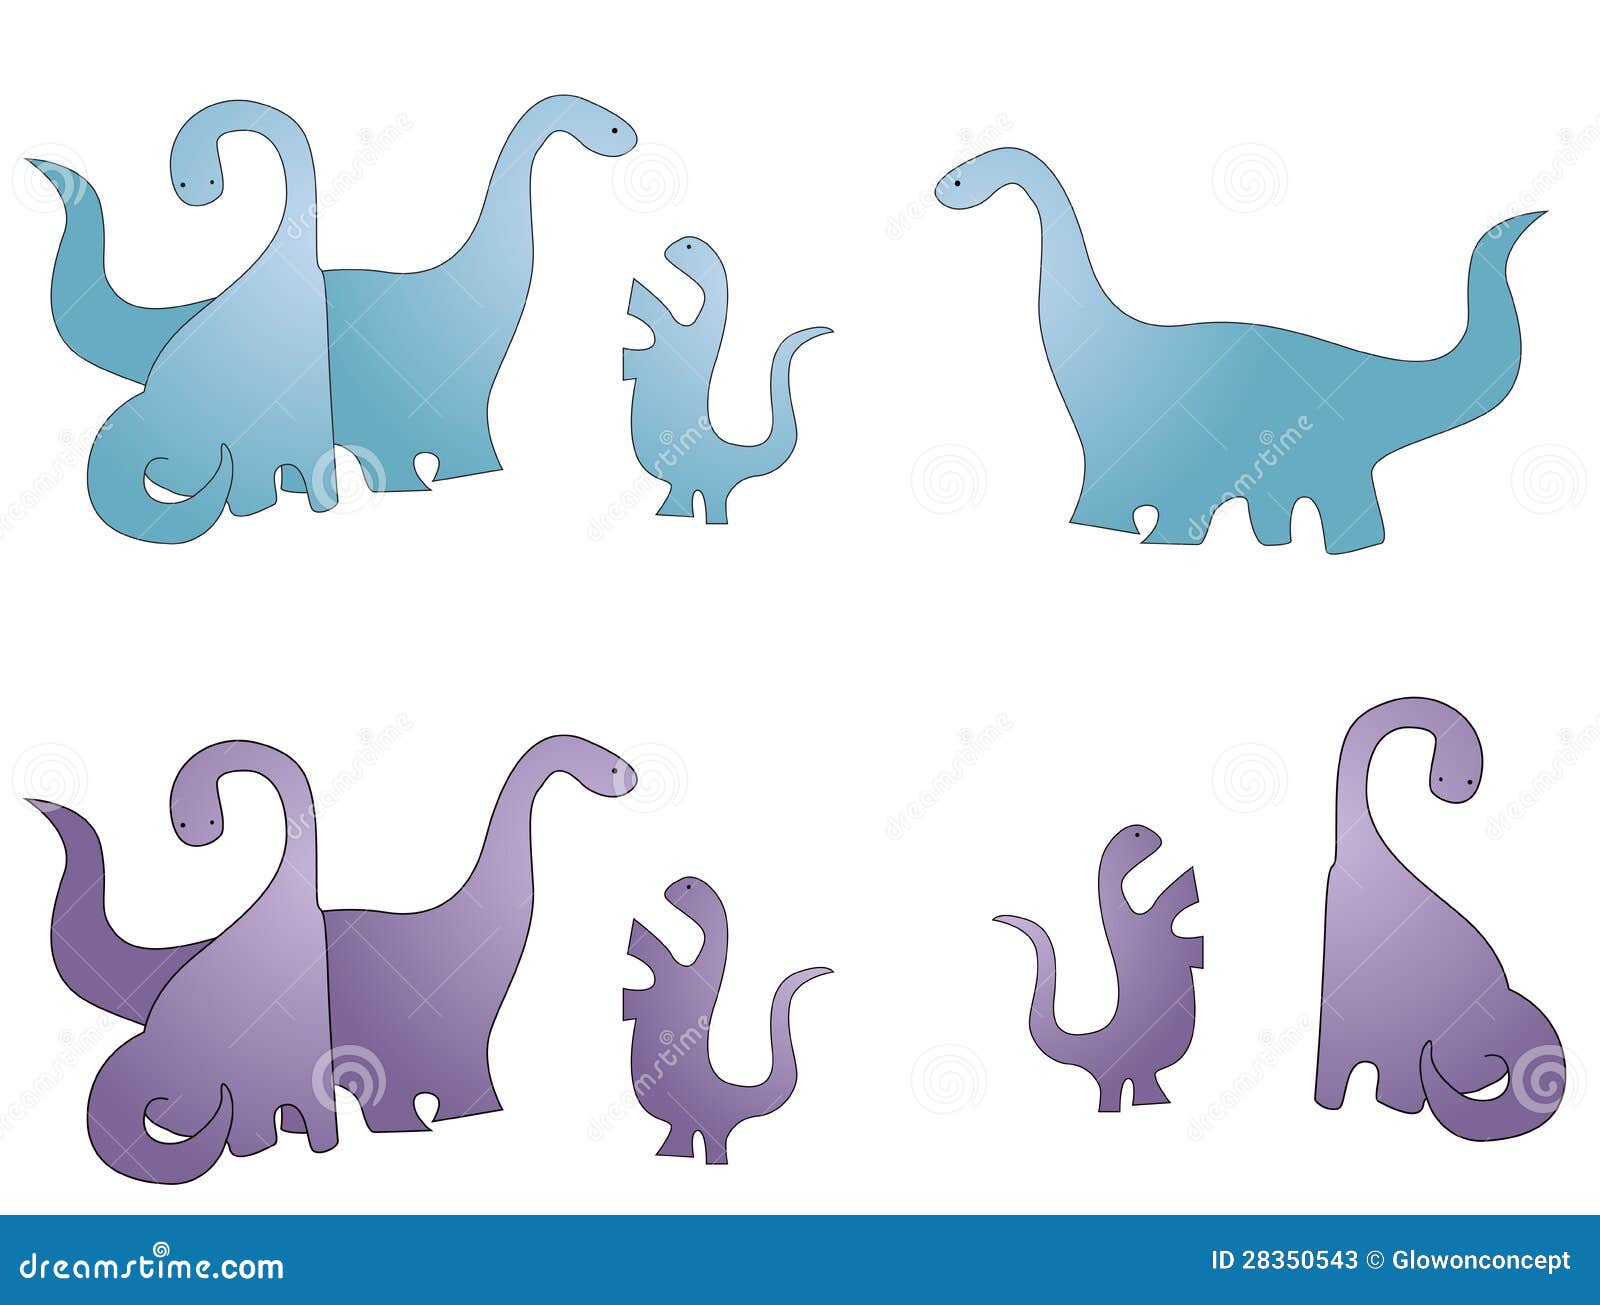 Dinosaur family cartoon stock vector. Illustration of family - 28350543